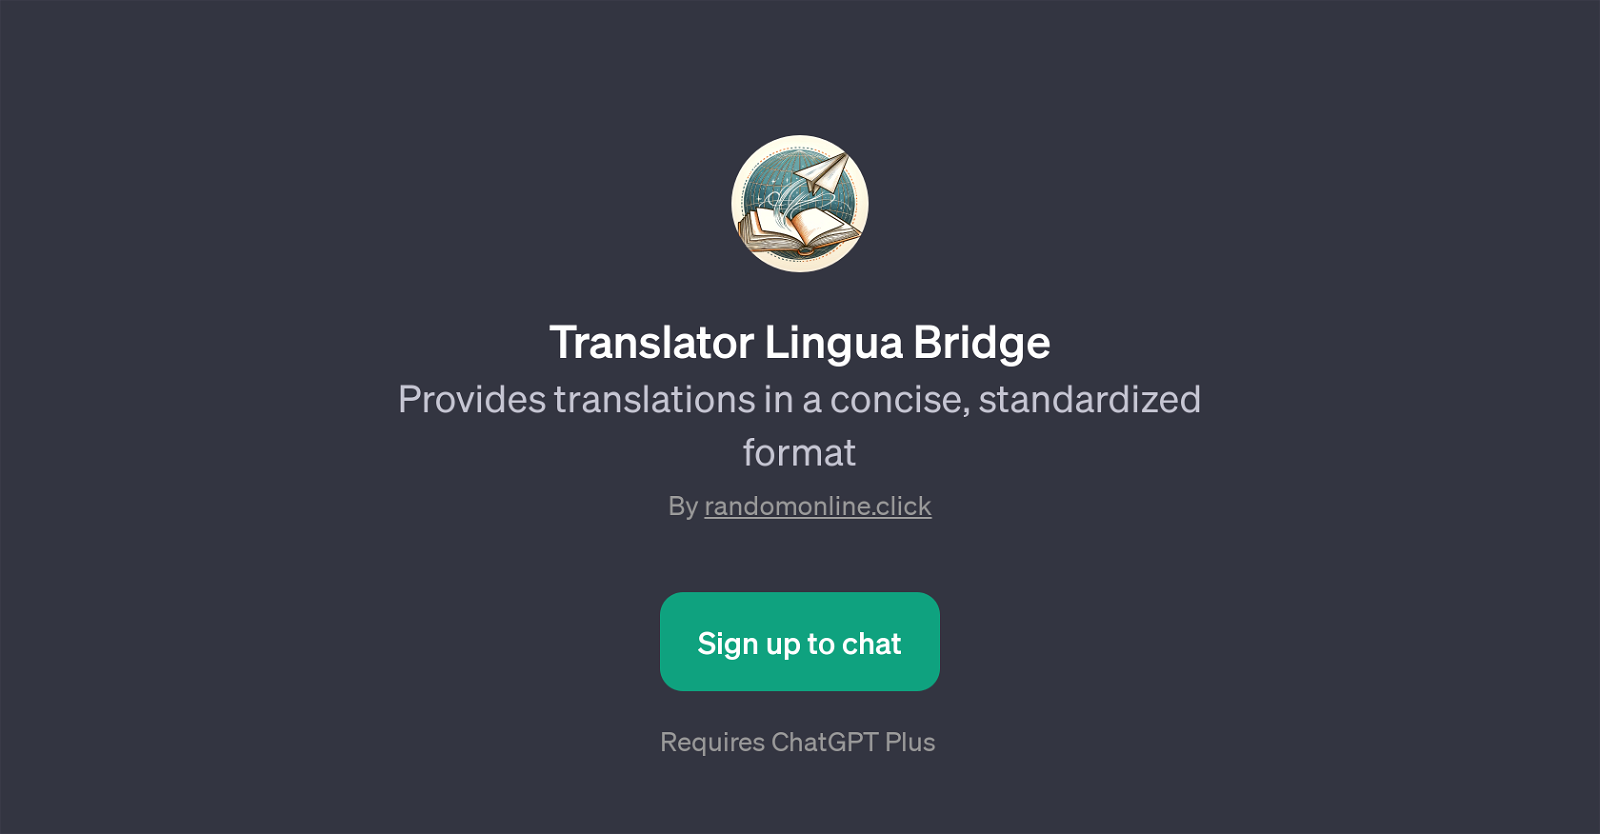 Translator Lingua Bridge website